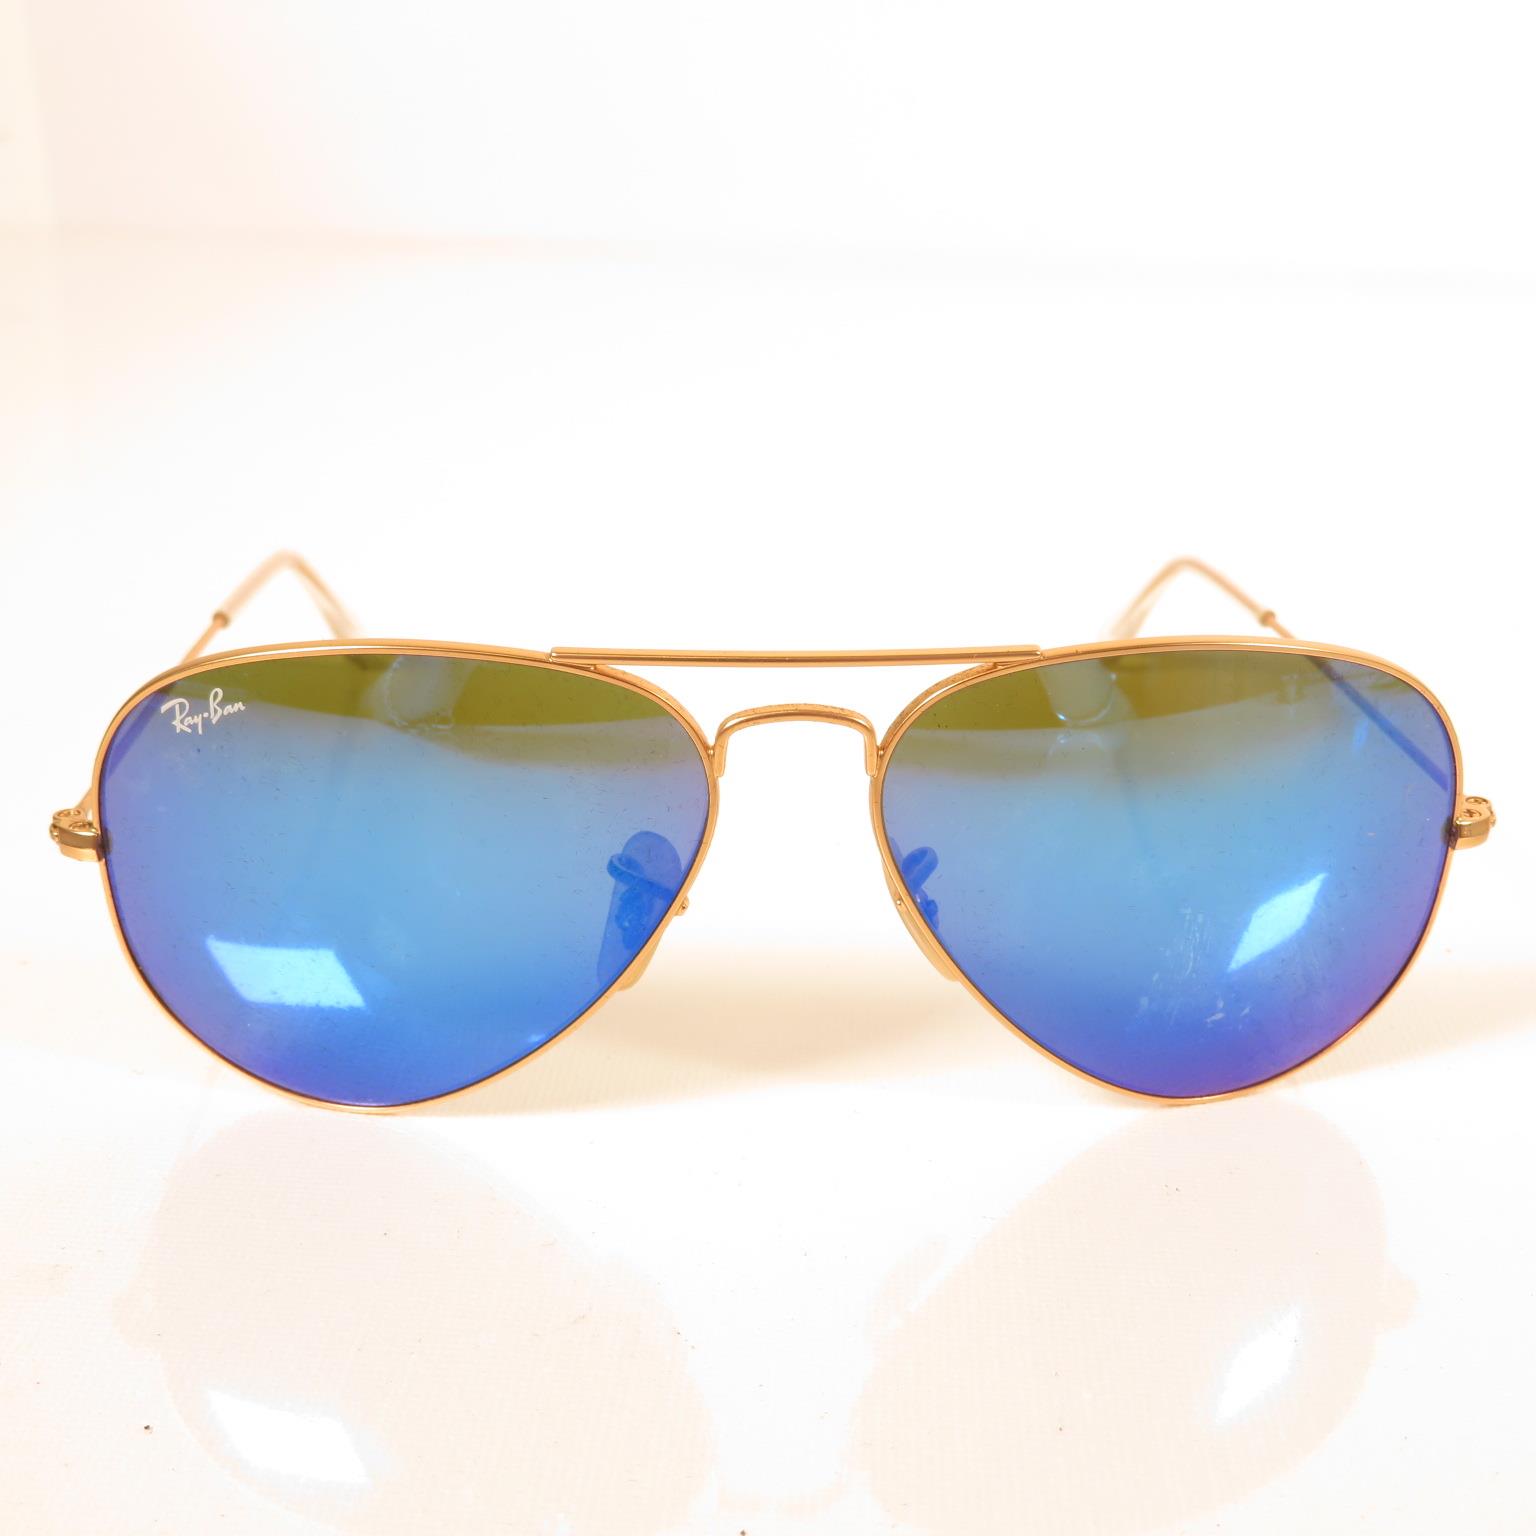 4x pairs Ray Ban sunglasses - - Image 9 of 22